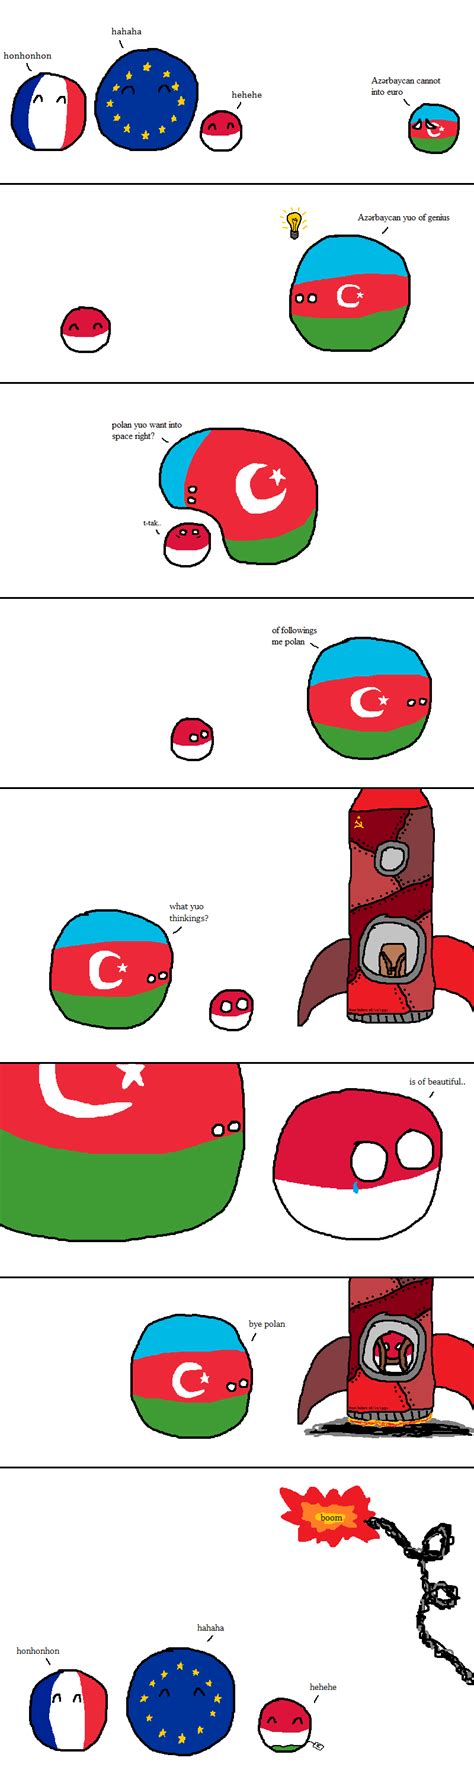 R Azerbaijanball Reddit Post And Comment Search Socialgrep